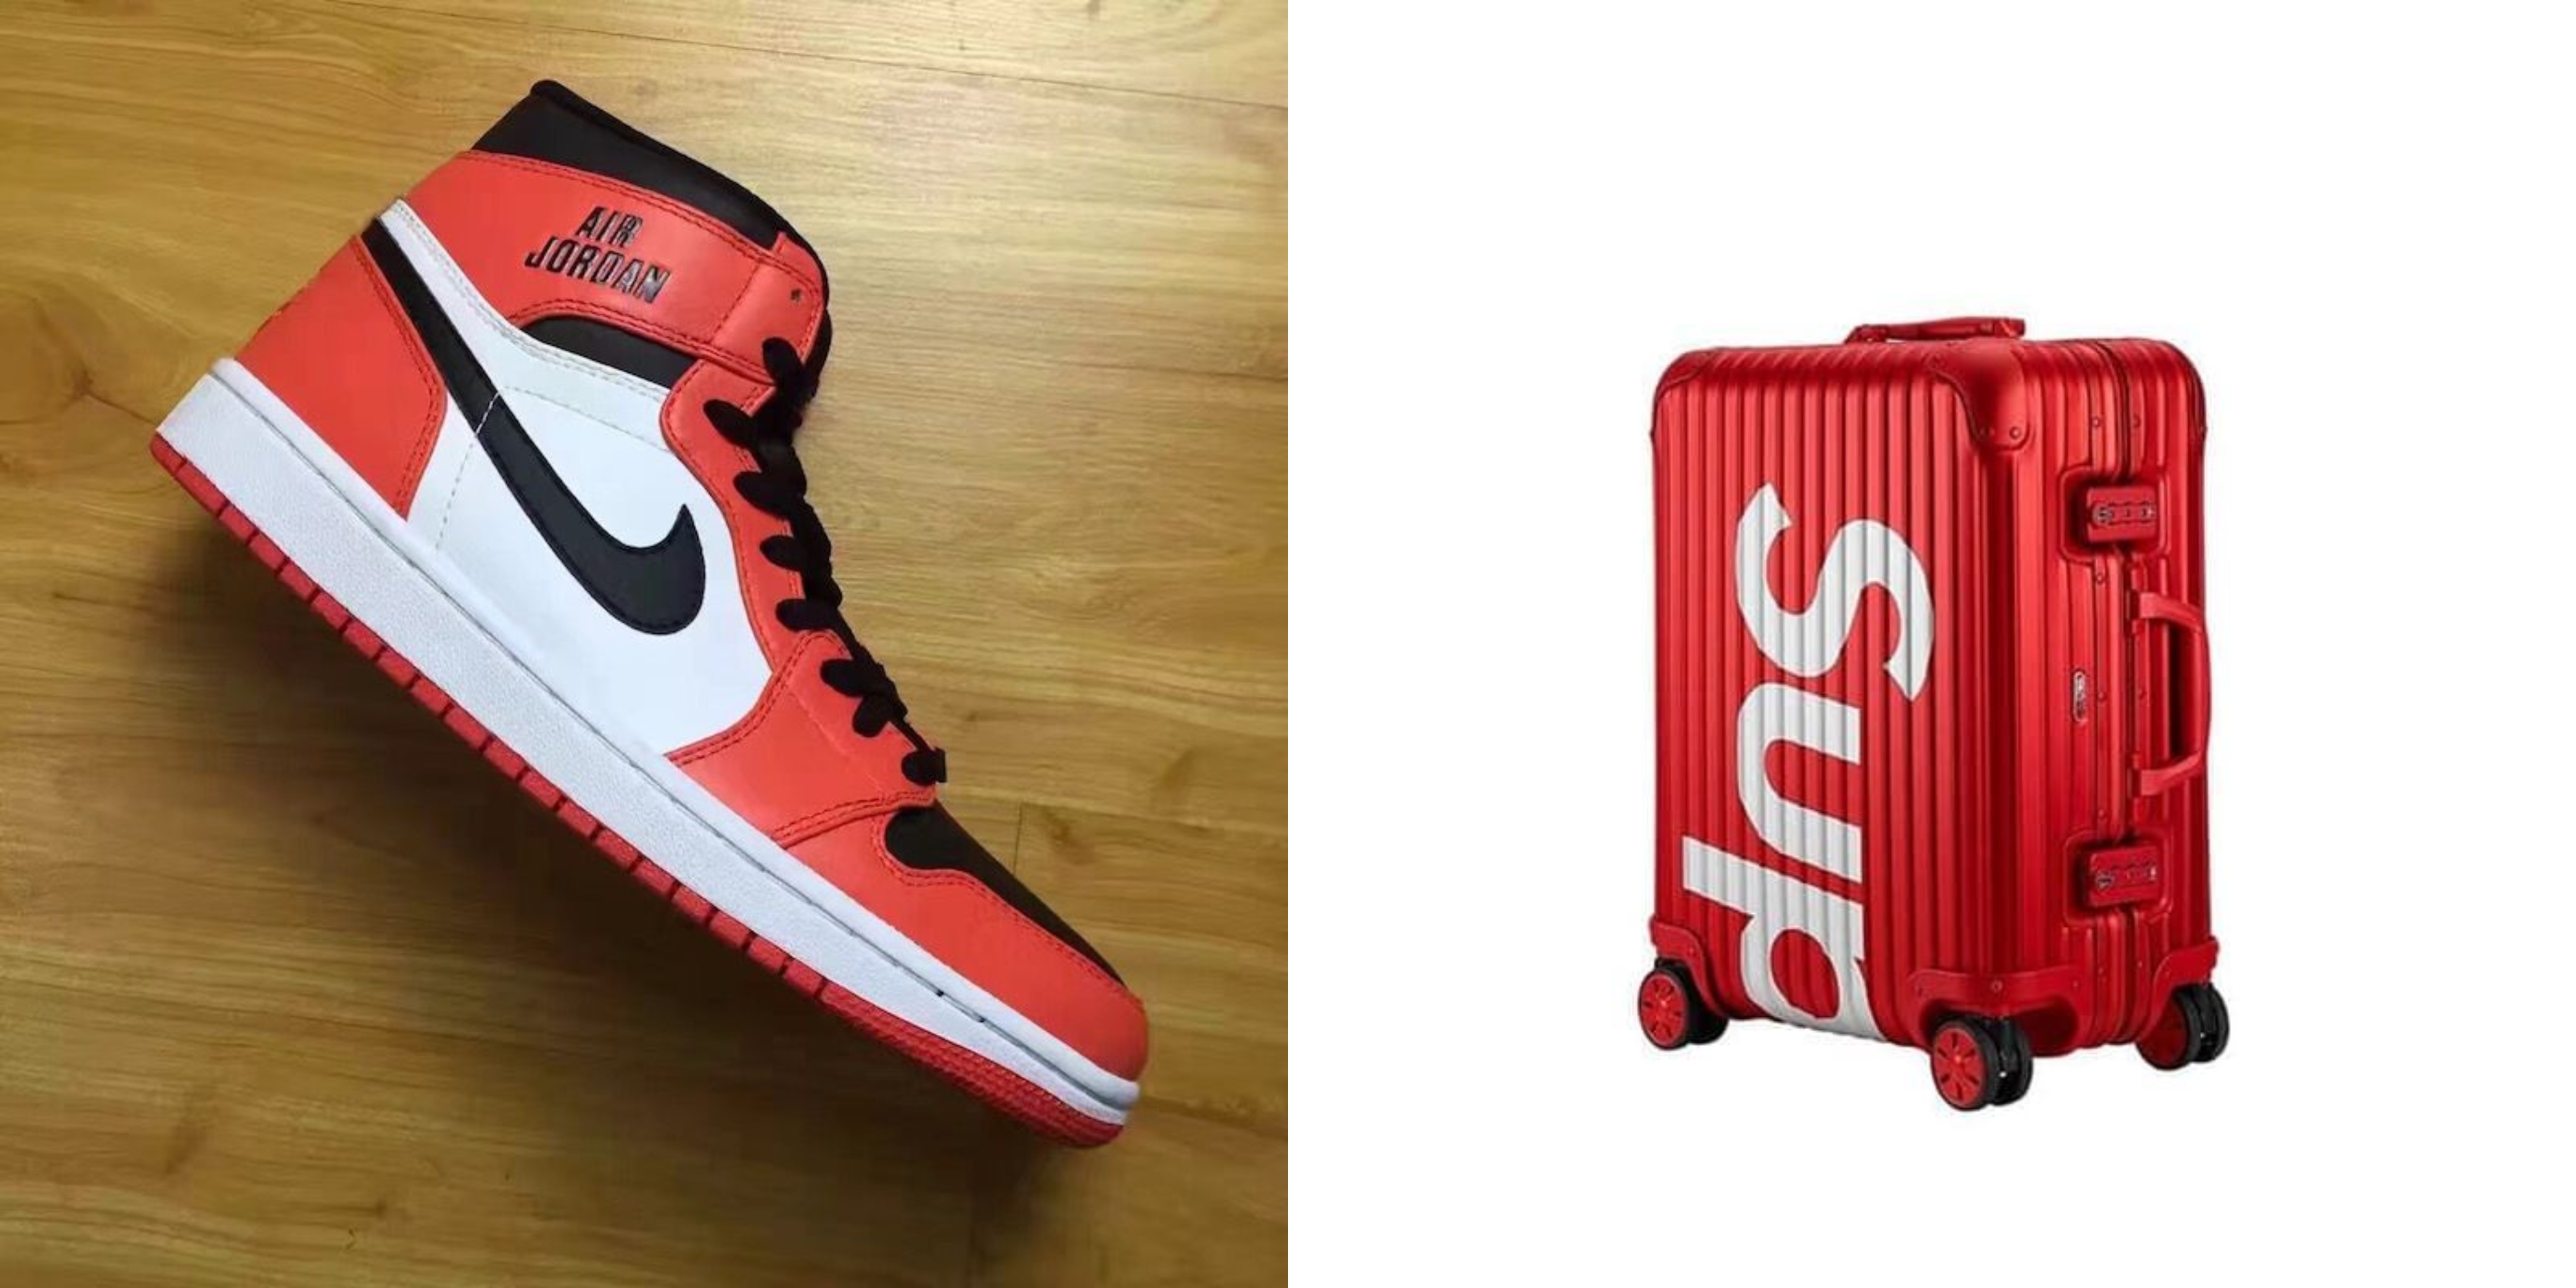 Akun Reddit 'Aiden6' Ceritakan Bangganya Pakai Supreme & Nike KW, Ngerasa Nggak Masalah Sama Sekali